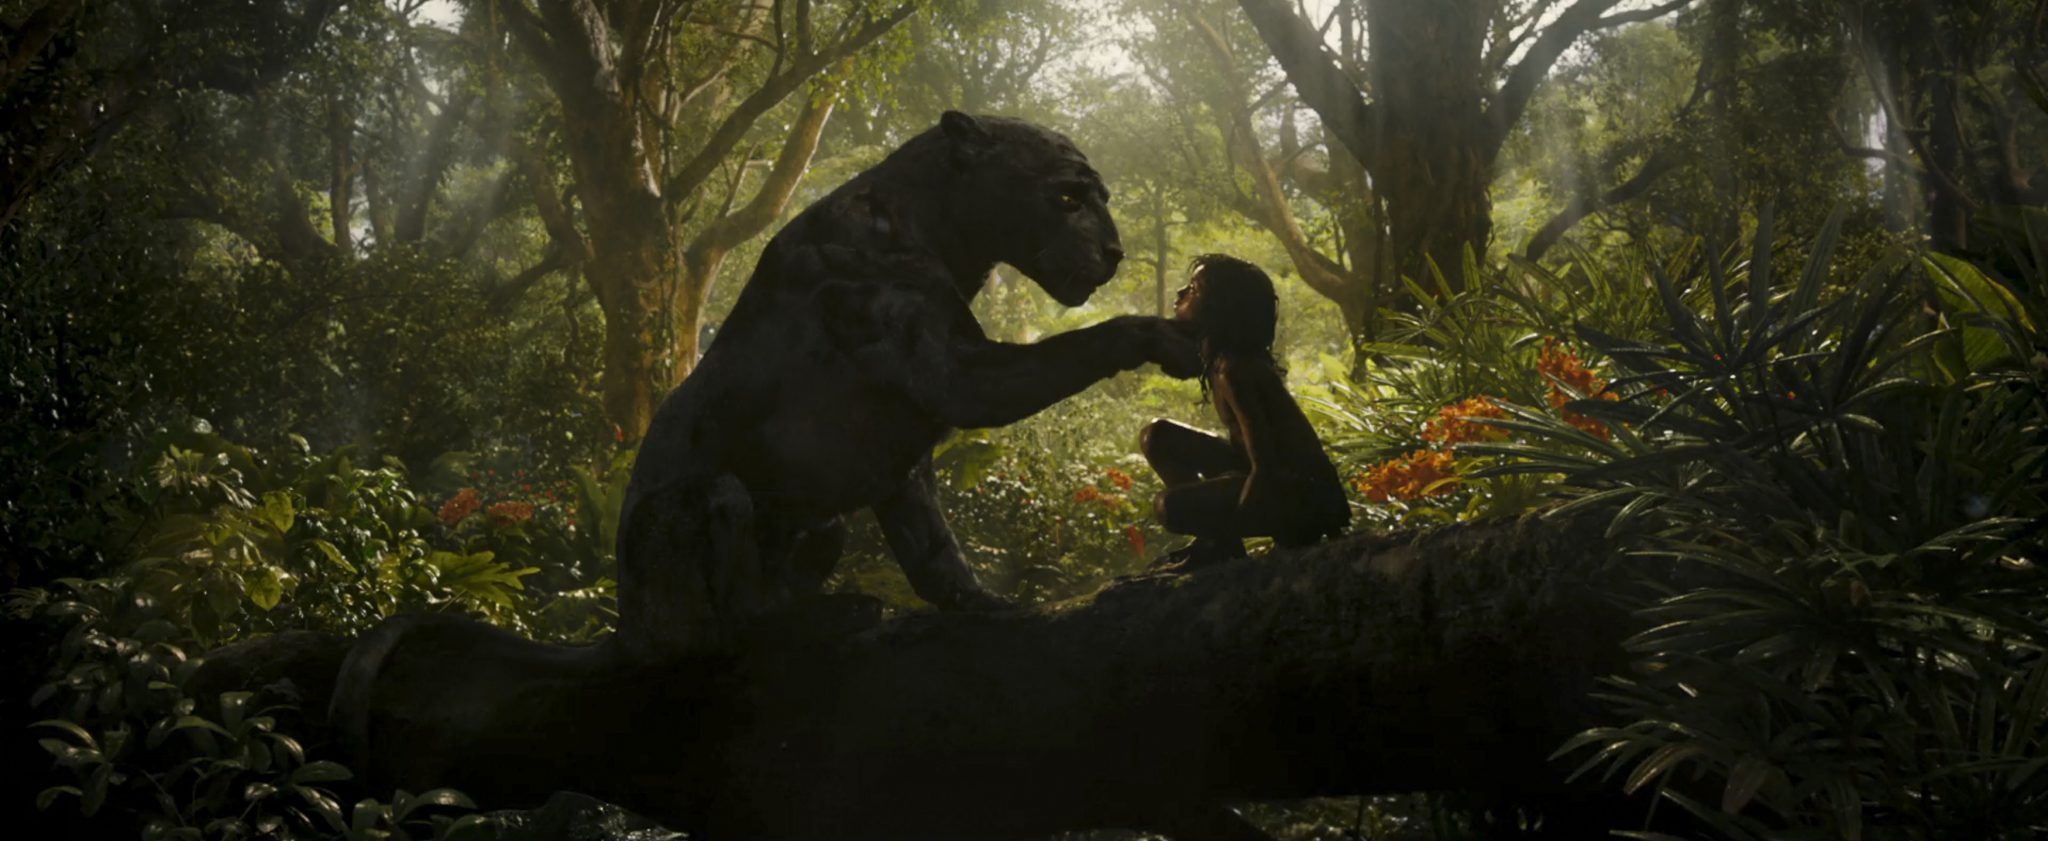 Crítica: ‘Mowgli: La leyenda de la selva’